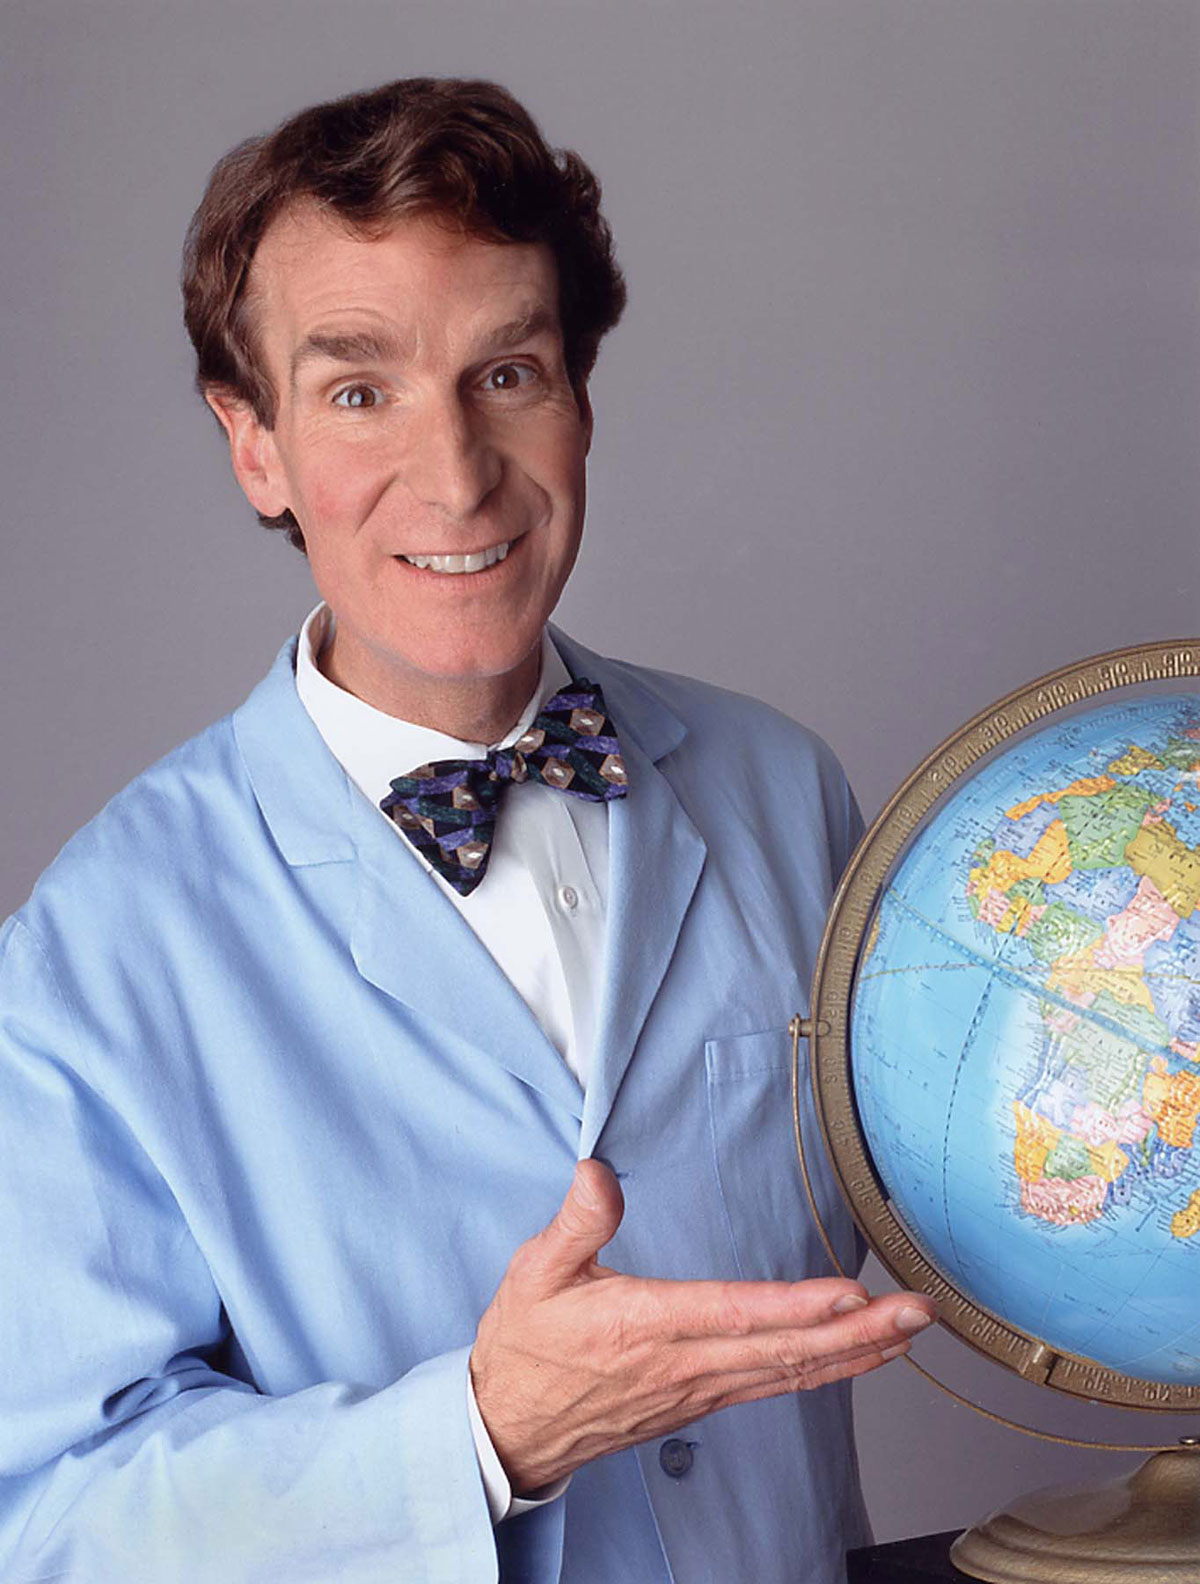 Photograph of Bill Nye